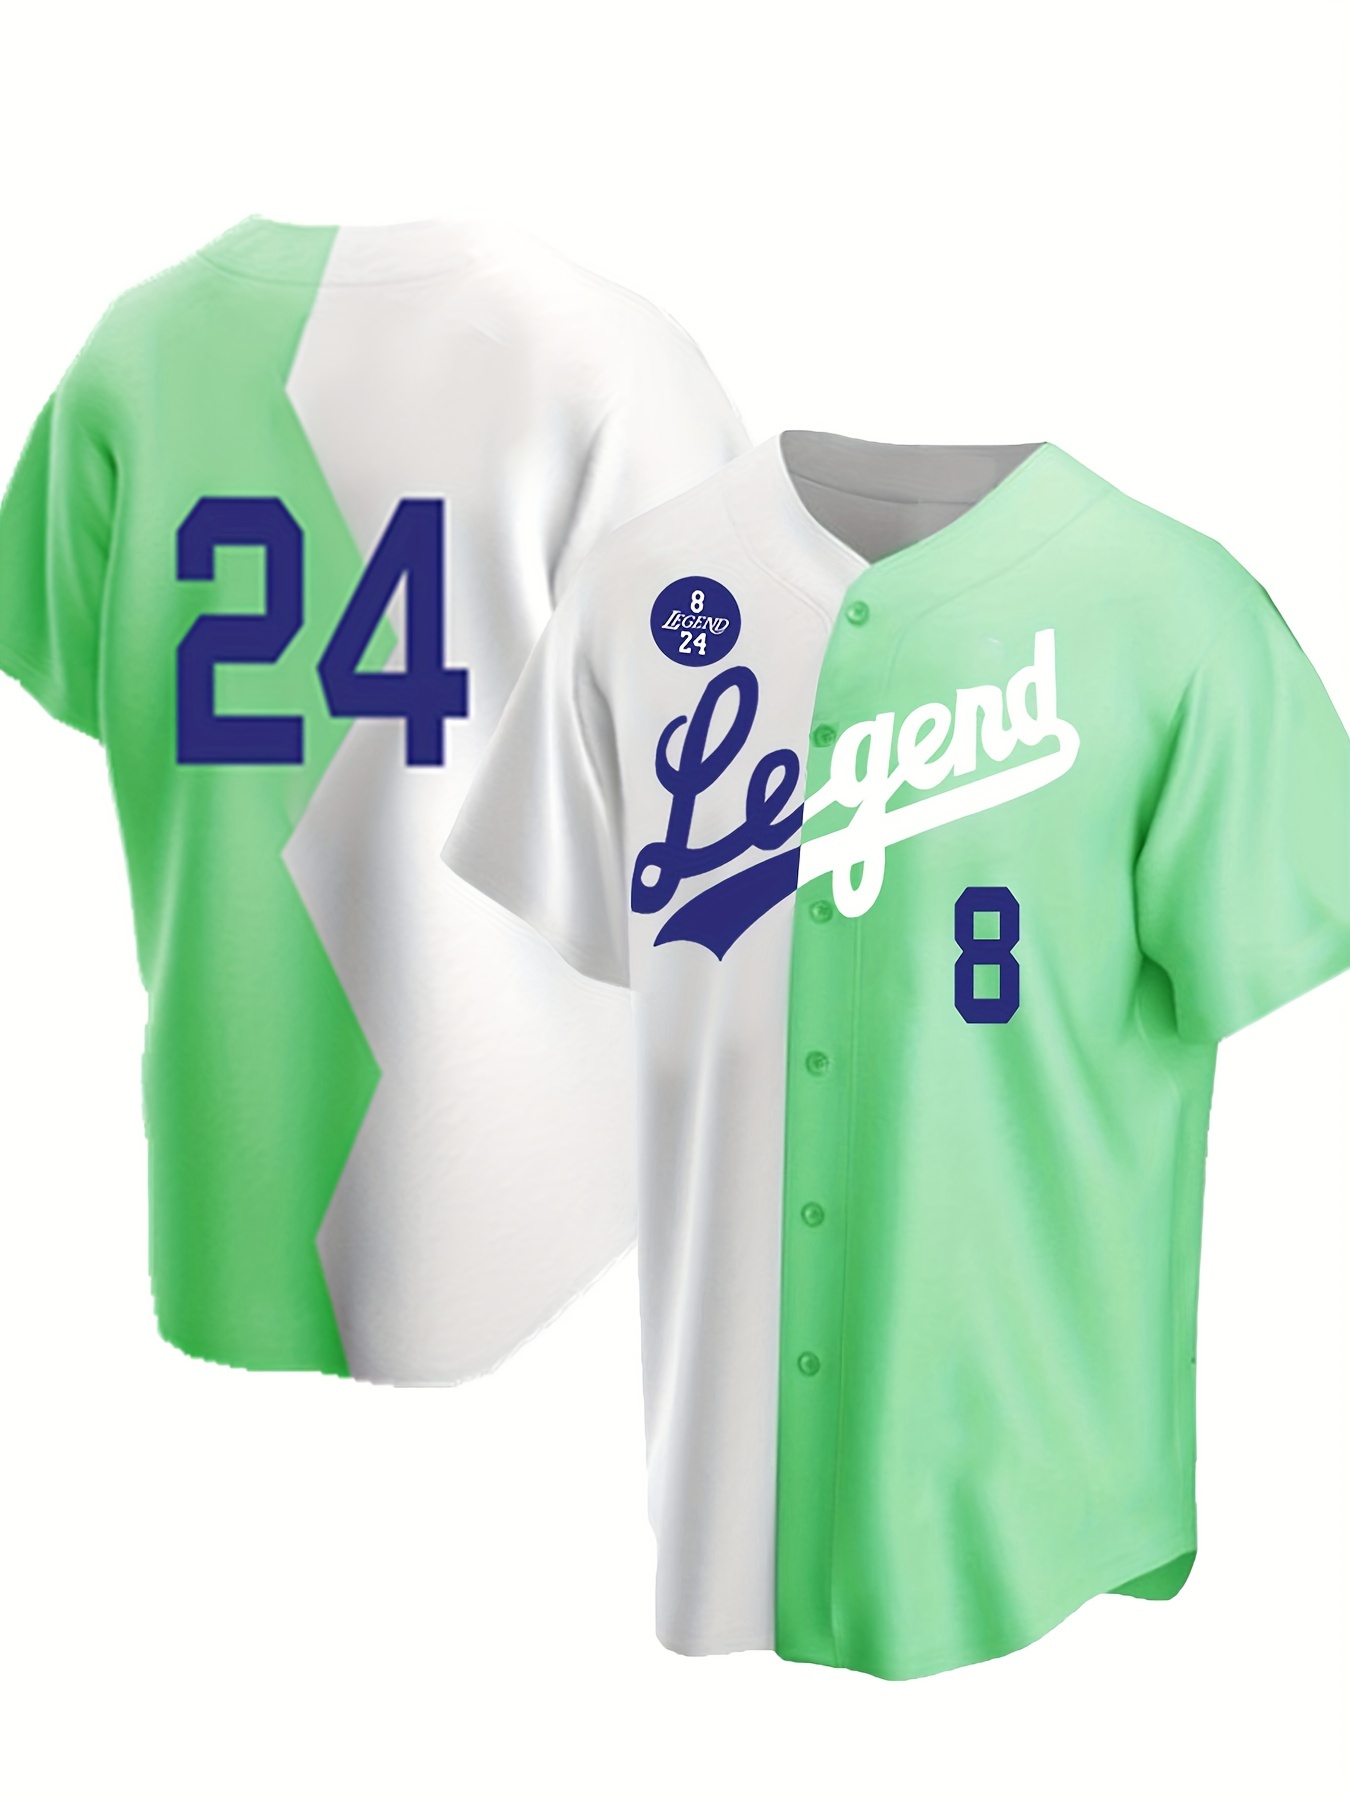 Men's Legend #824 Embroidery Baseball Jersey, Button Up Short Sleeve Uniform Baseball Shirt for Training Competition,Temu